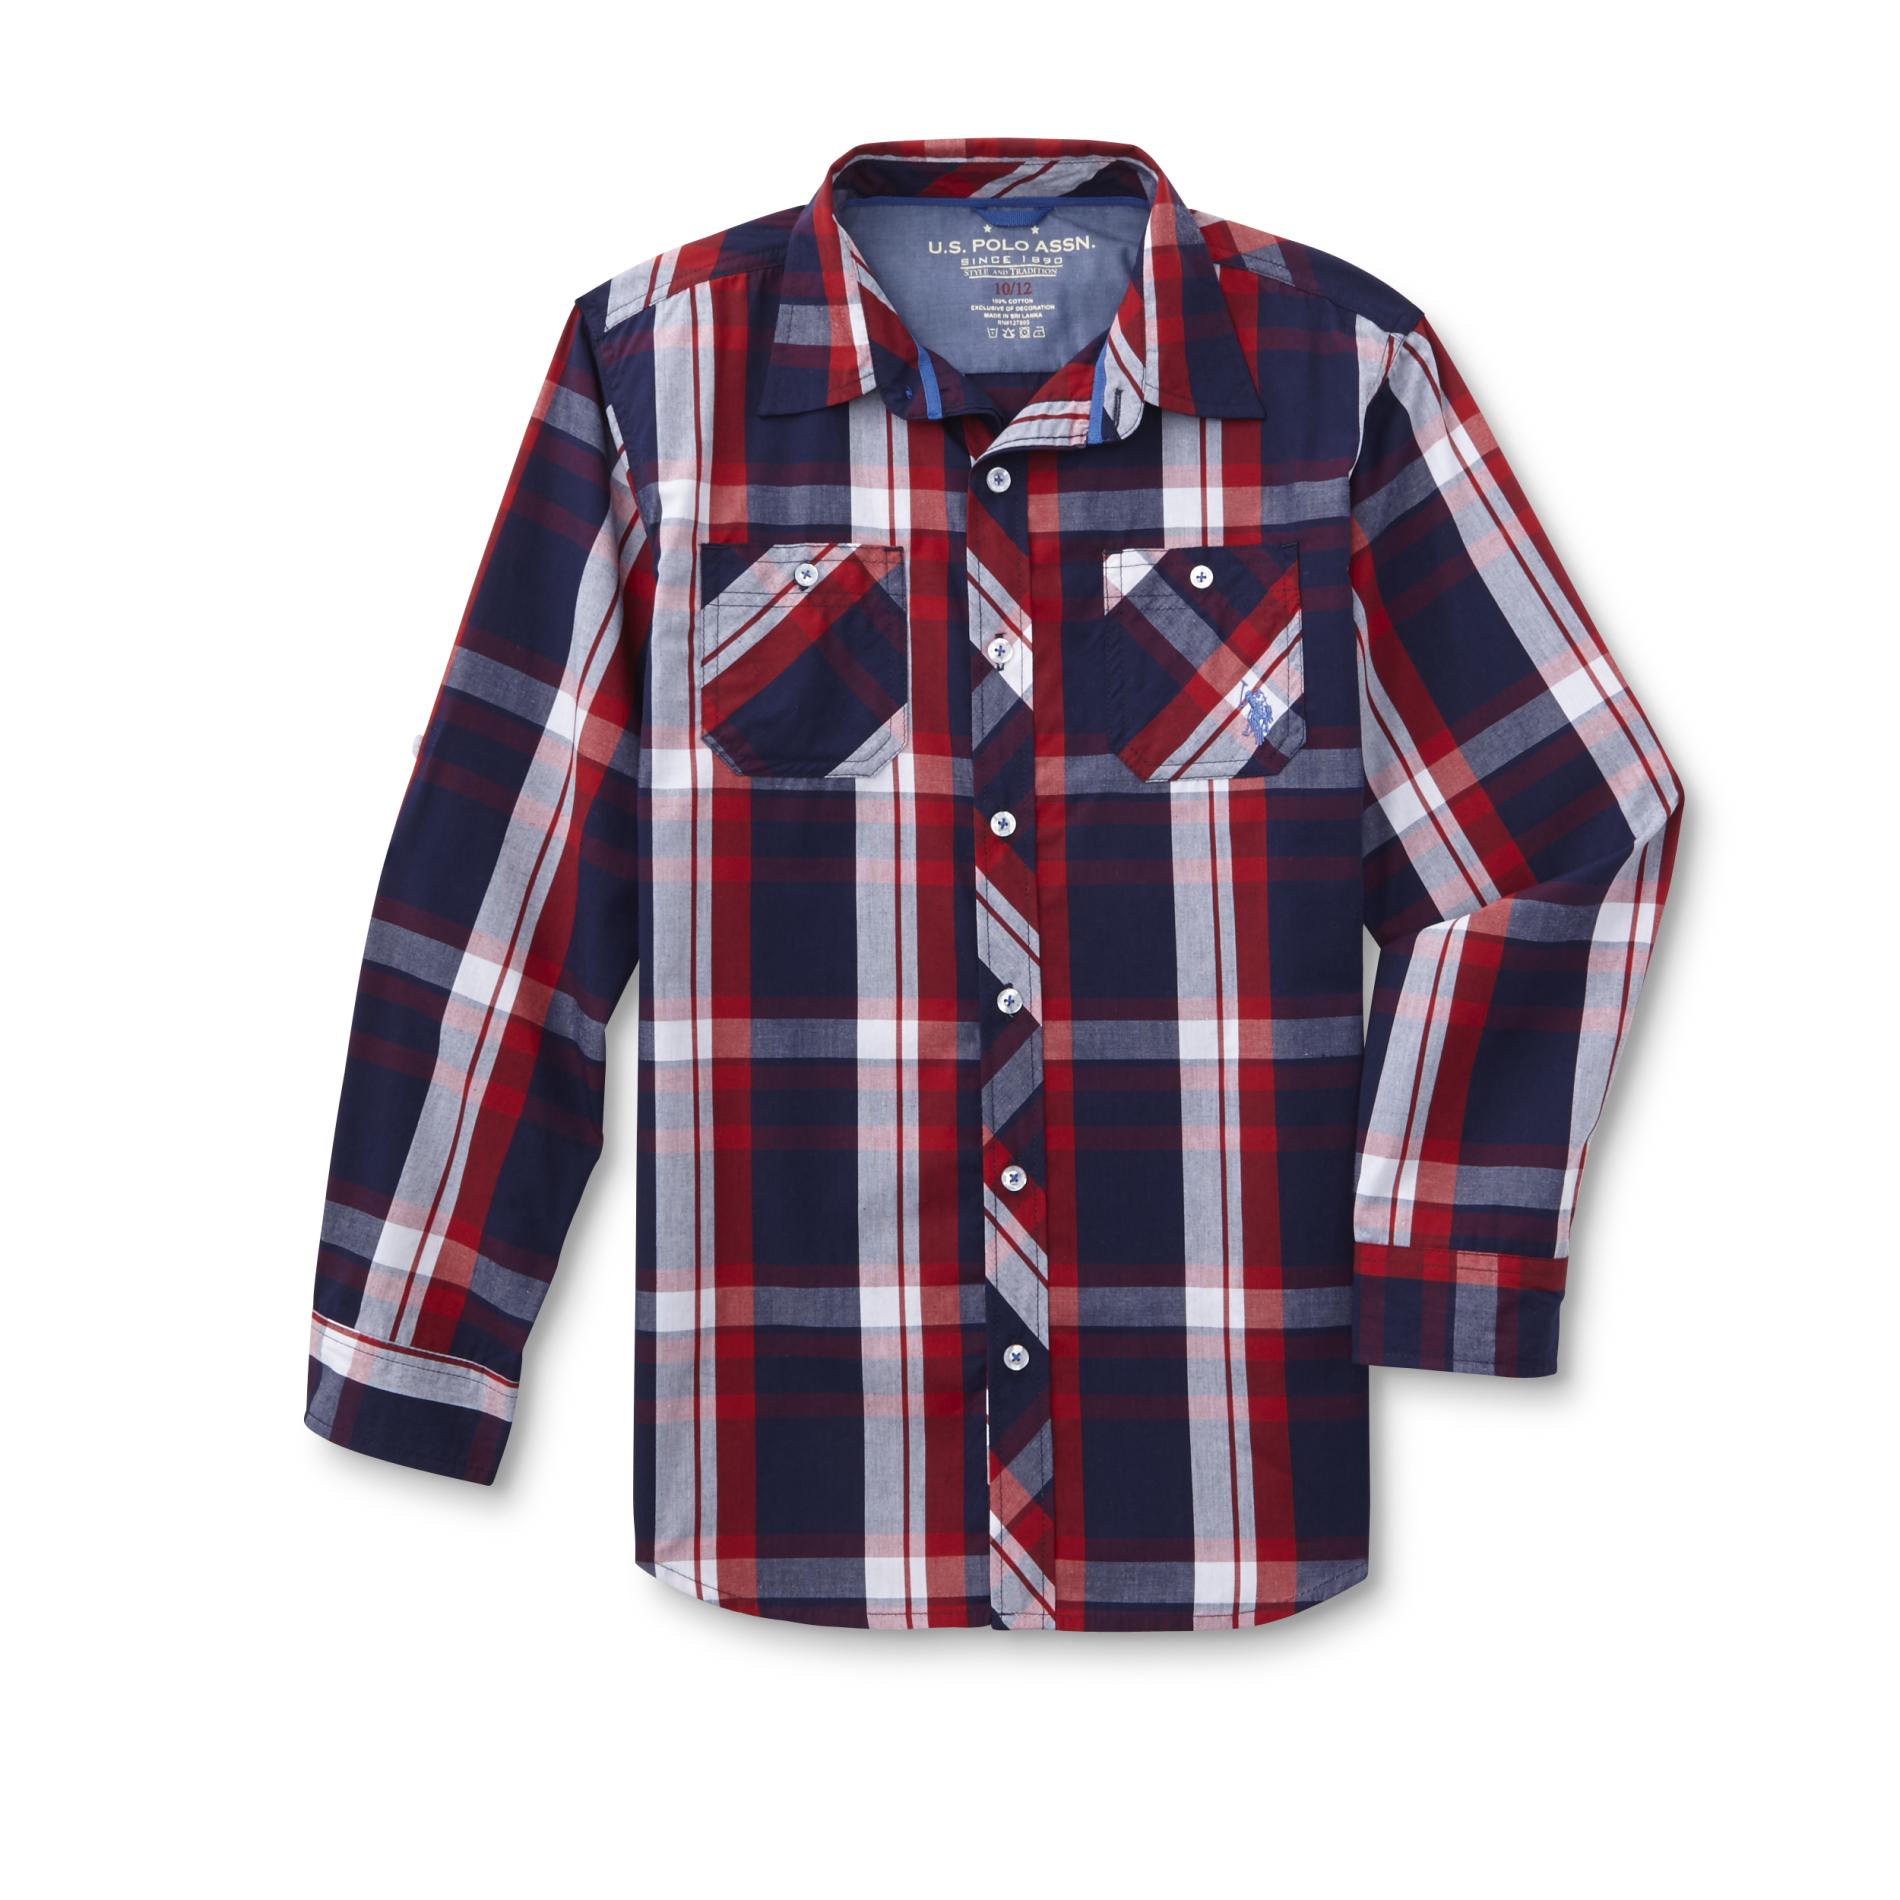 U.S. Polo Assn. Boys' Button-Front Shirt - Plaid